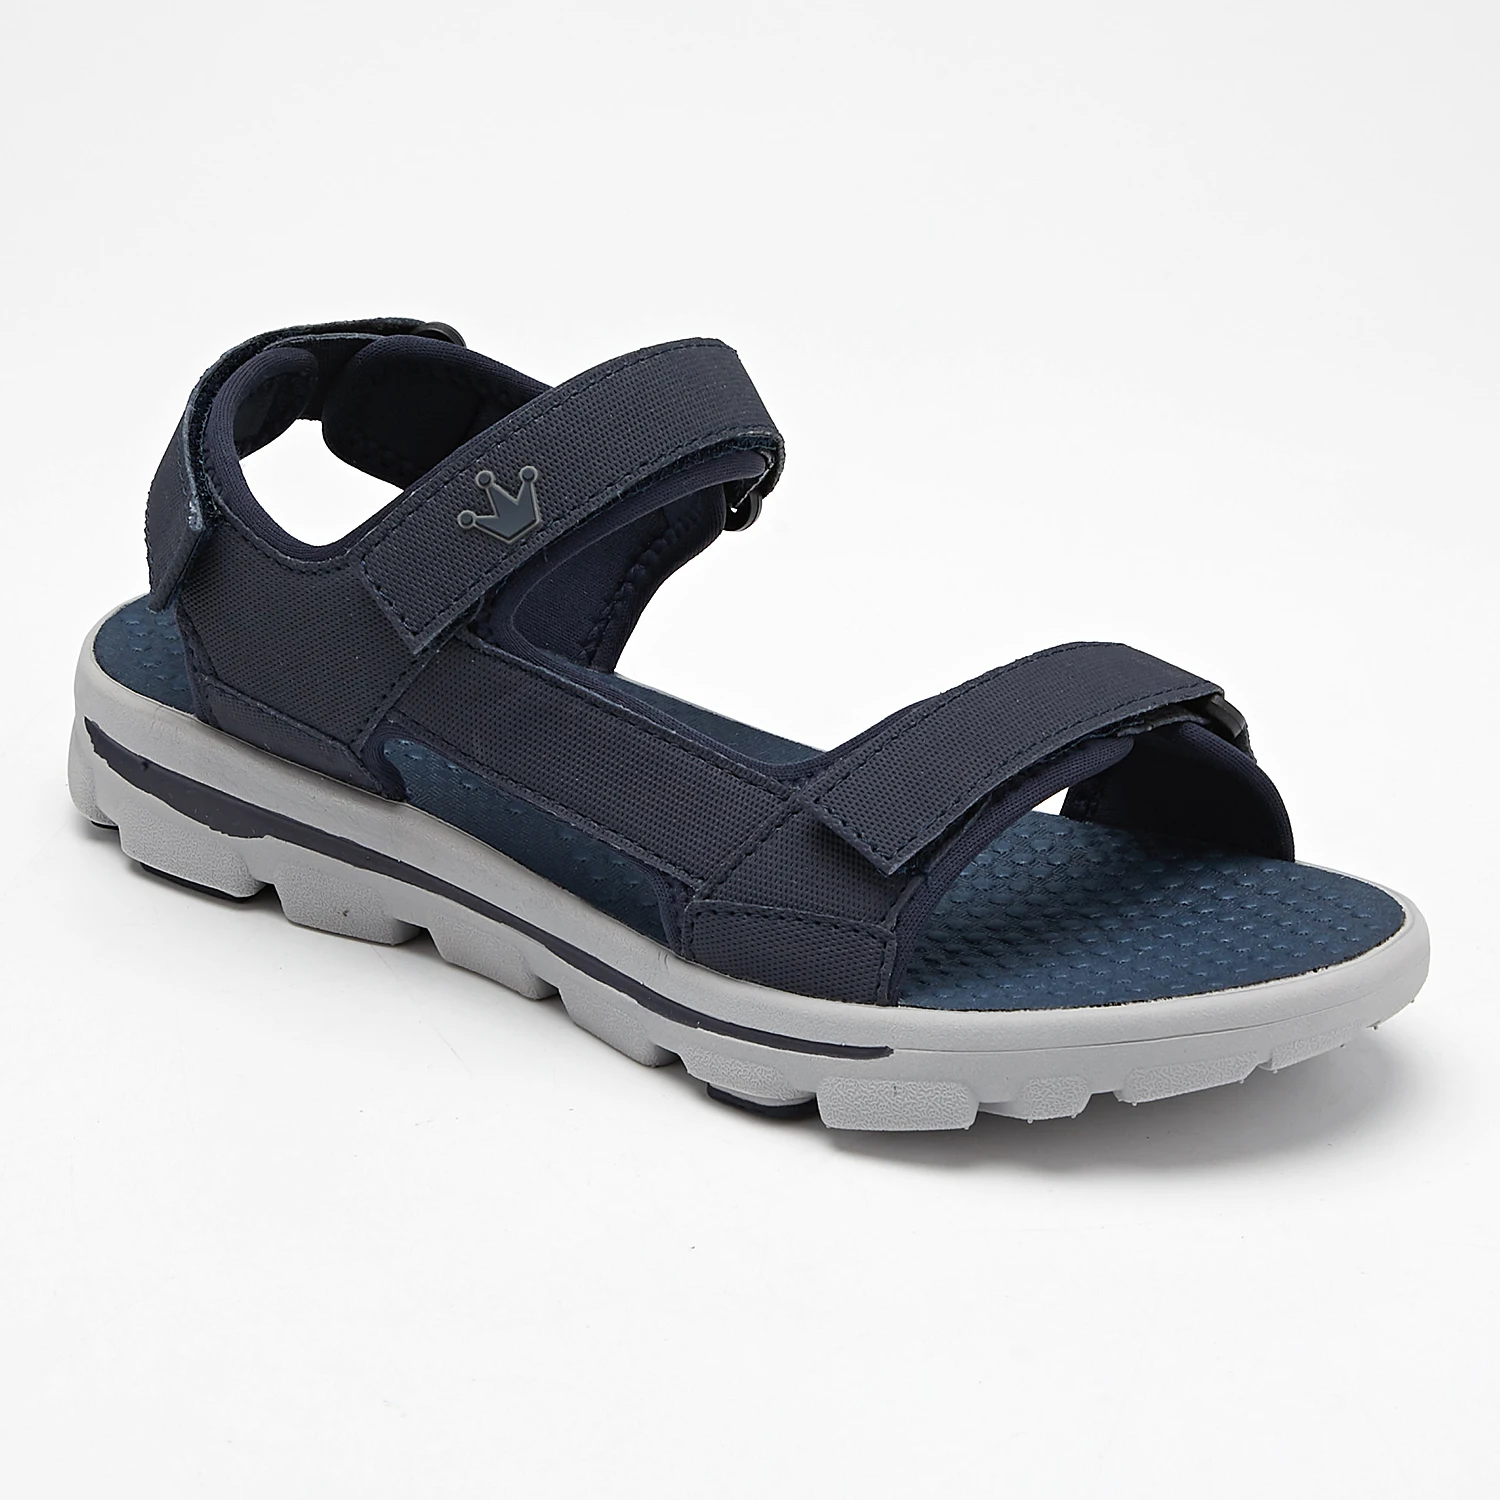 Source Top men's summer beach slippers new light weight sport sandal wholesaler outdoor sandals for mens latest models on m.alibaba.com